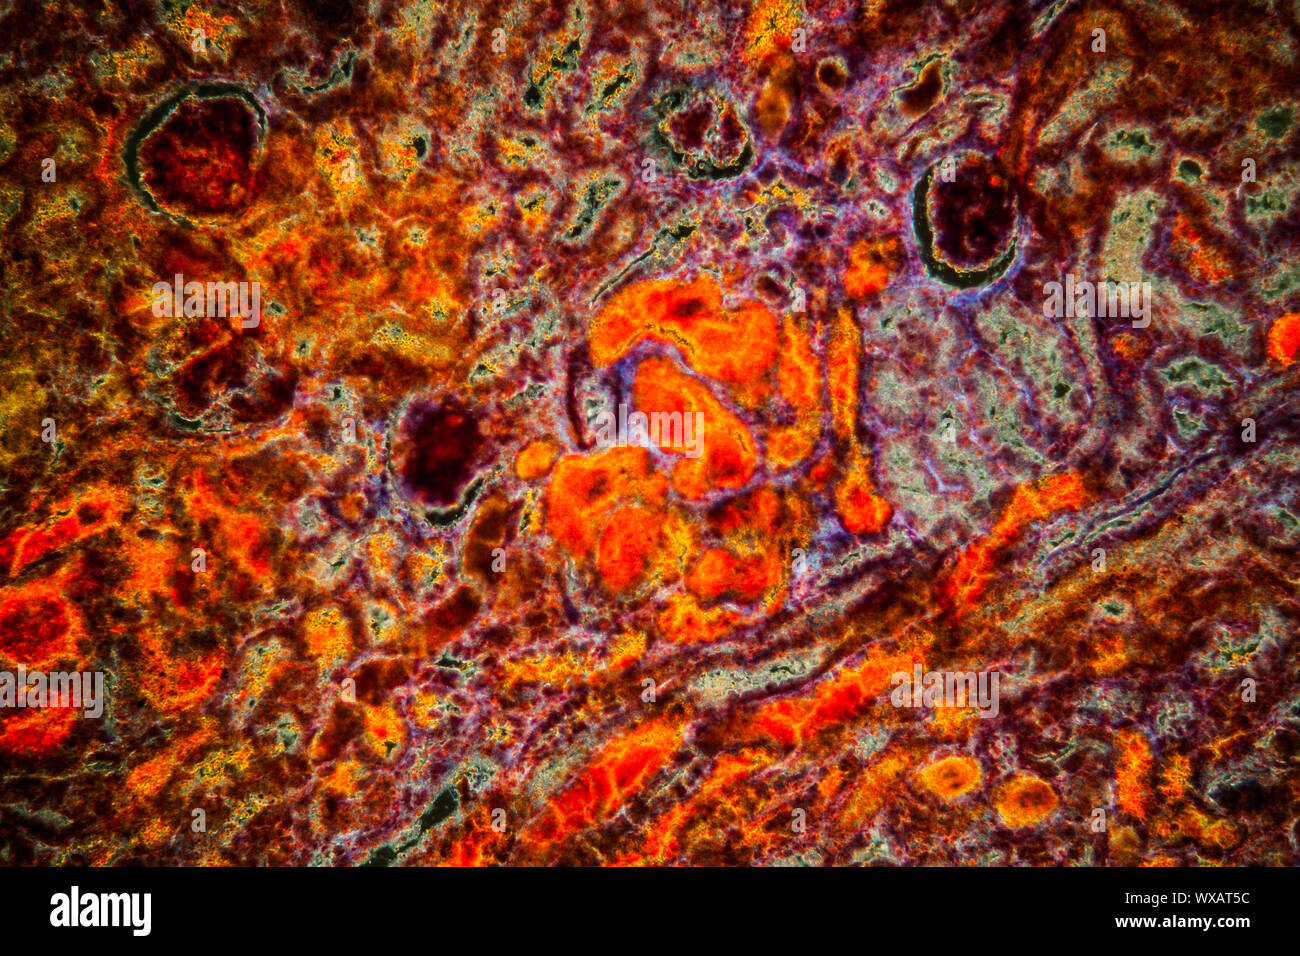 Kidney bleeding diseased tissue under the microscope 100x Stock Photo